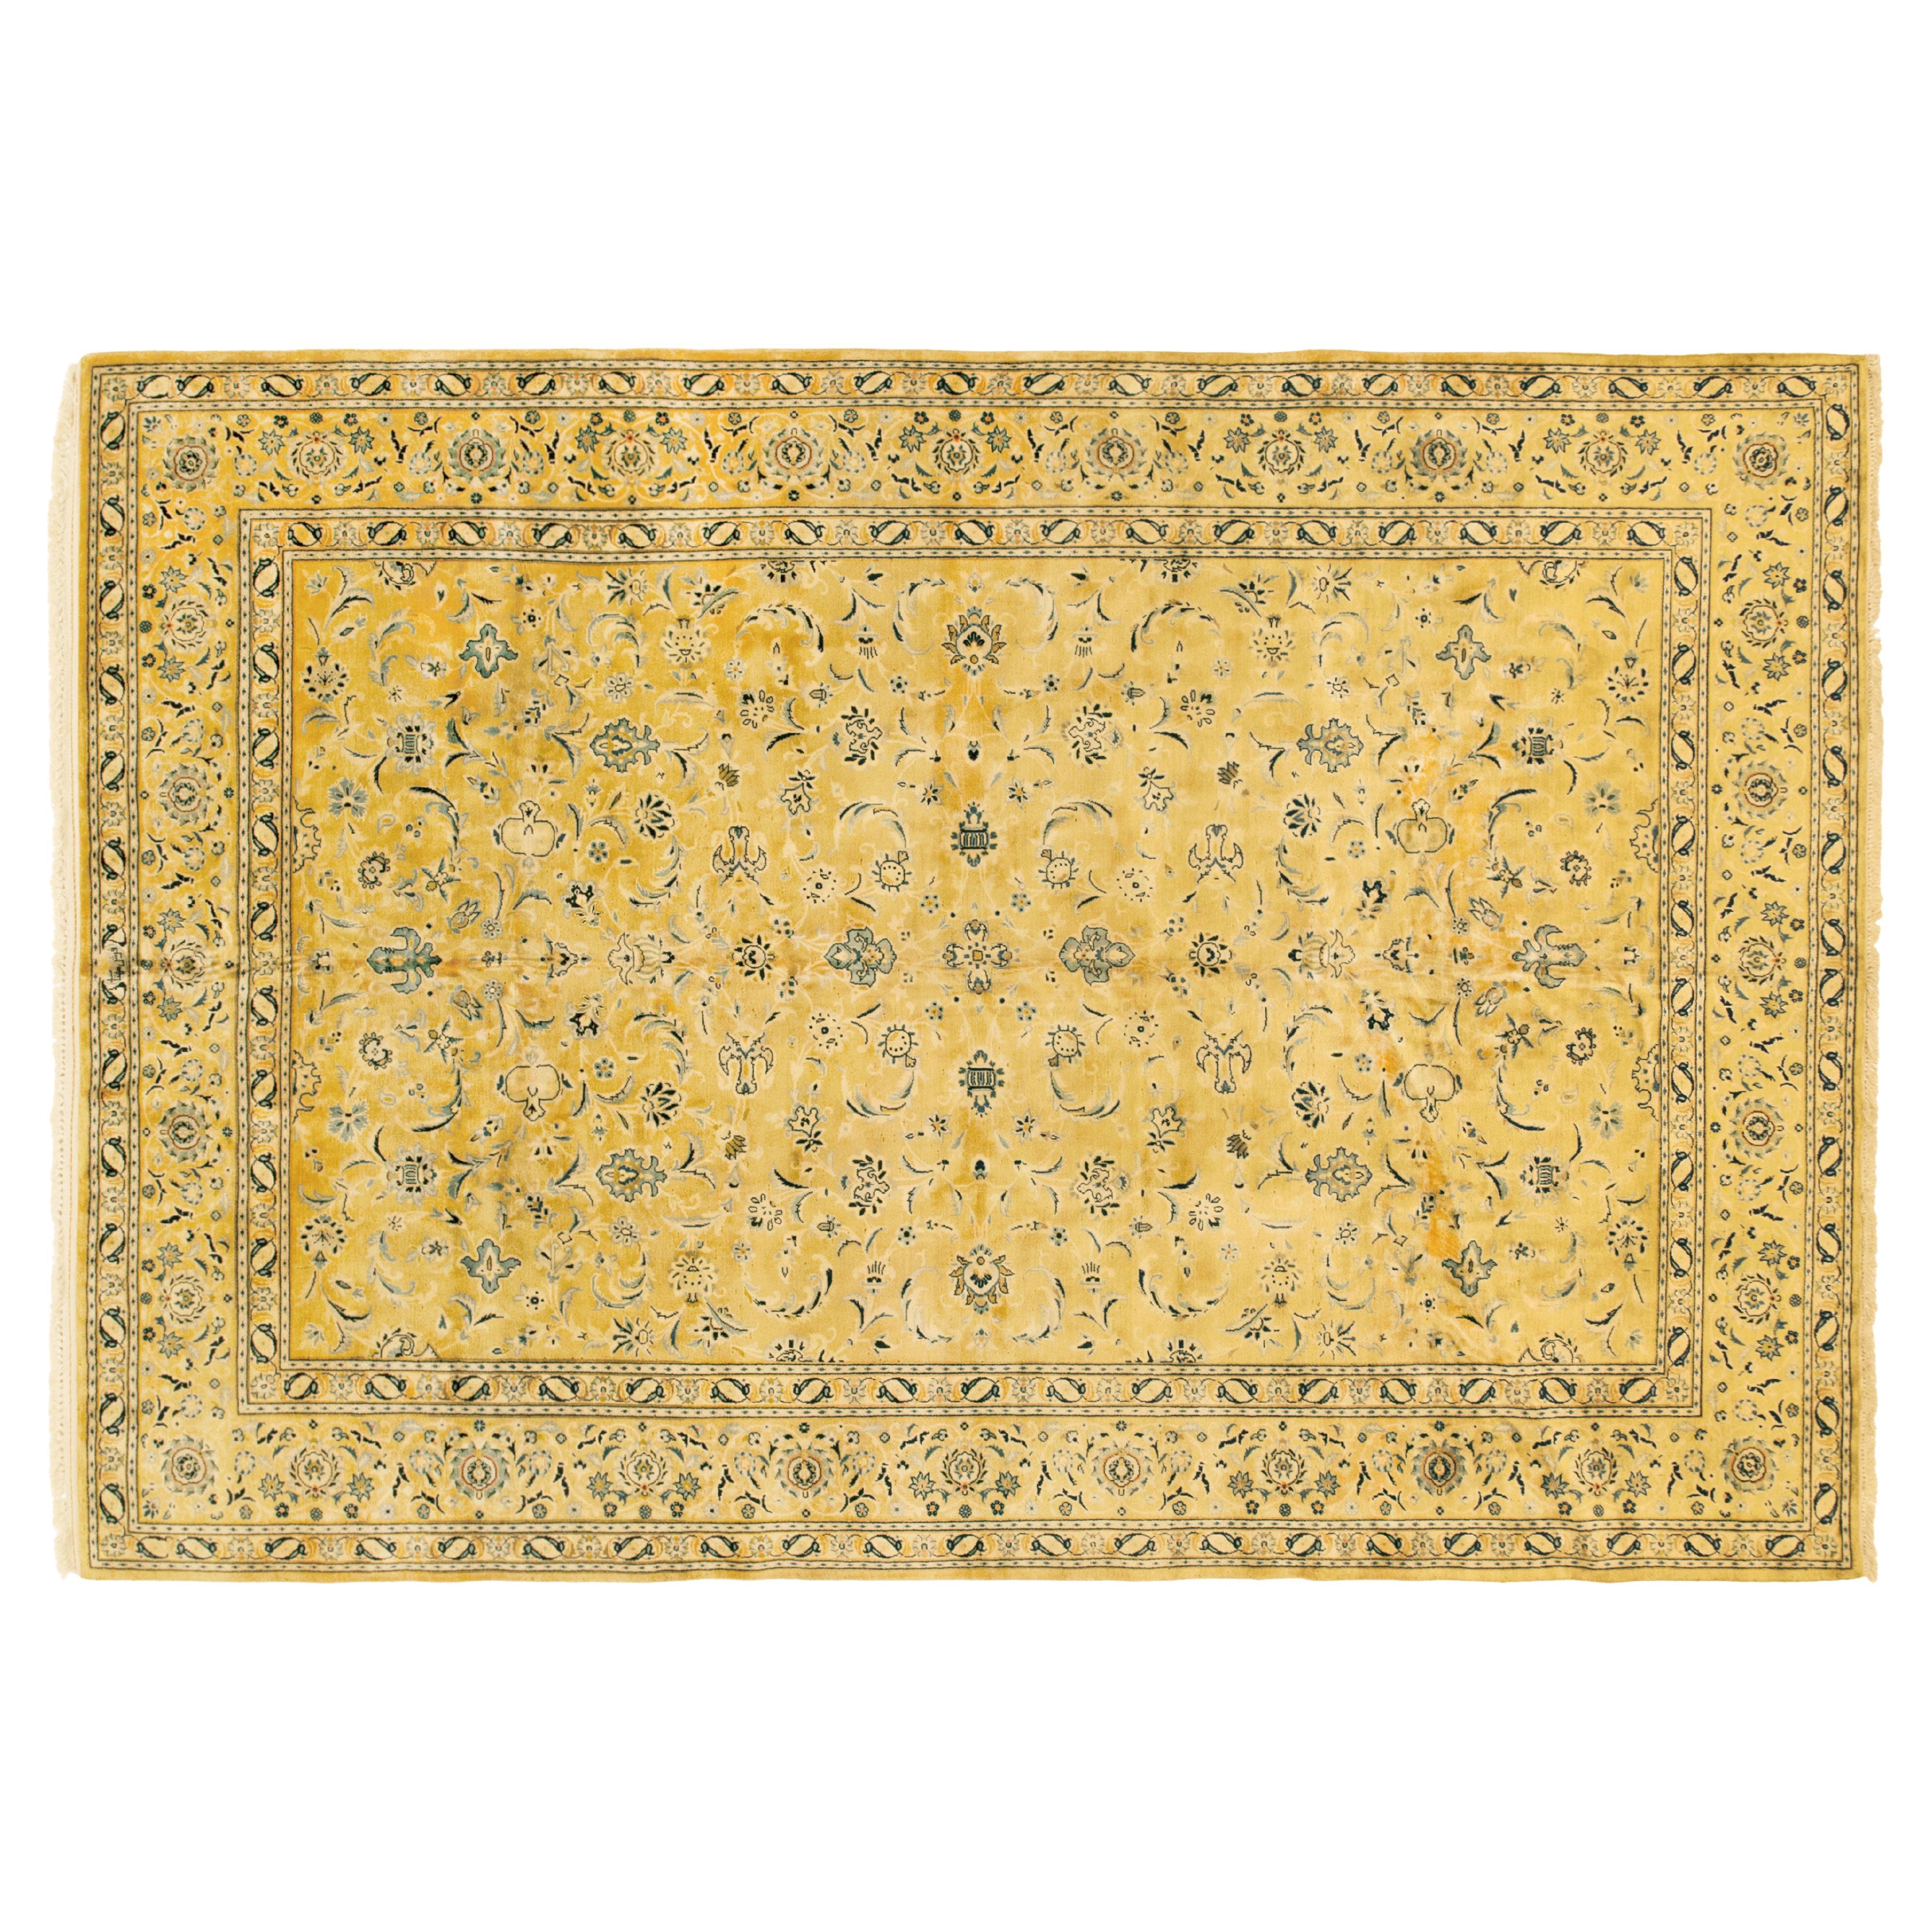 Vintage Persian Kashan Oriental Carpet, with Floral Elements